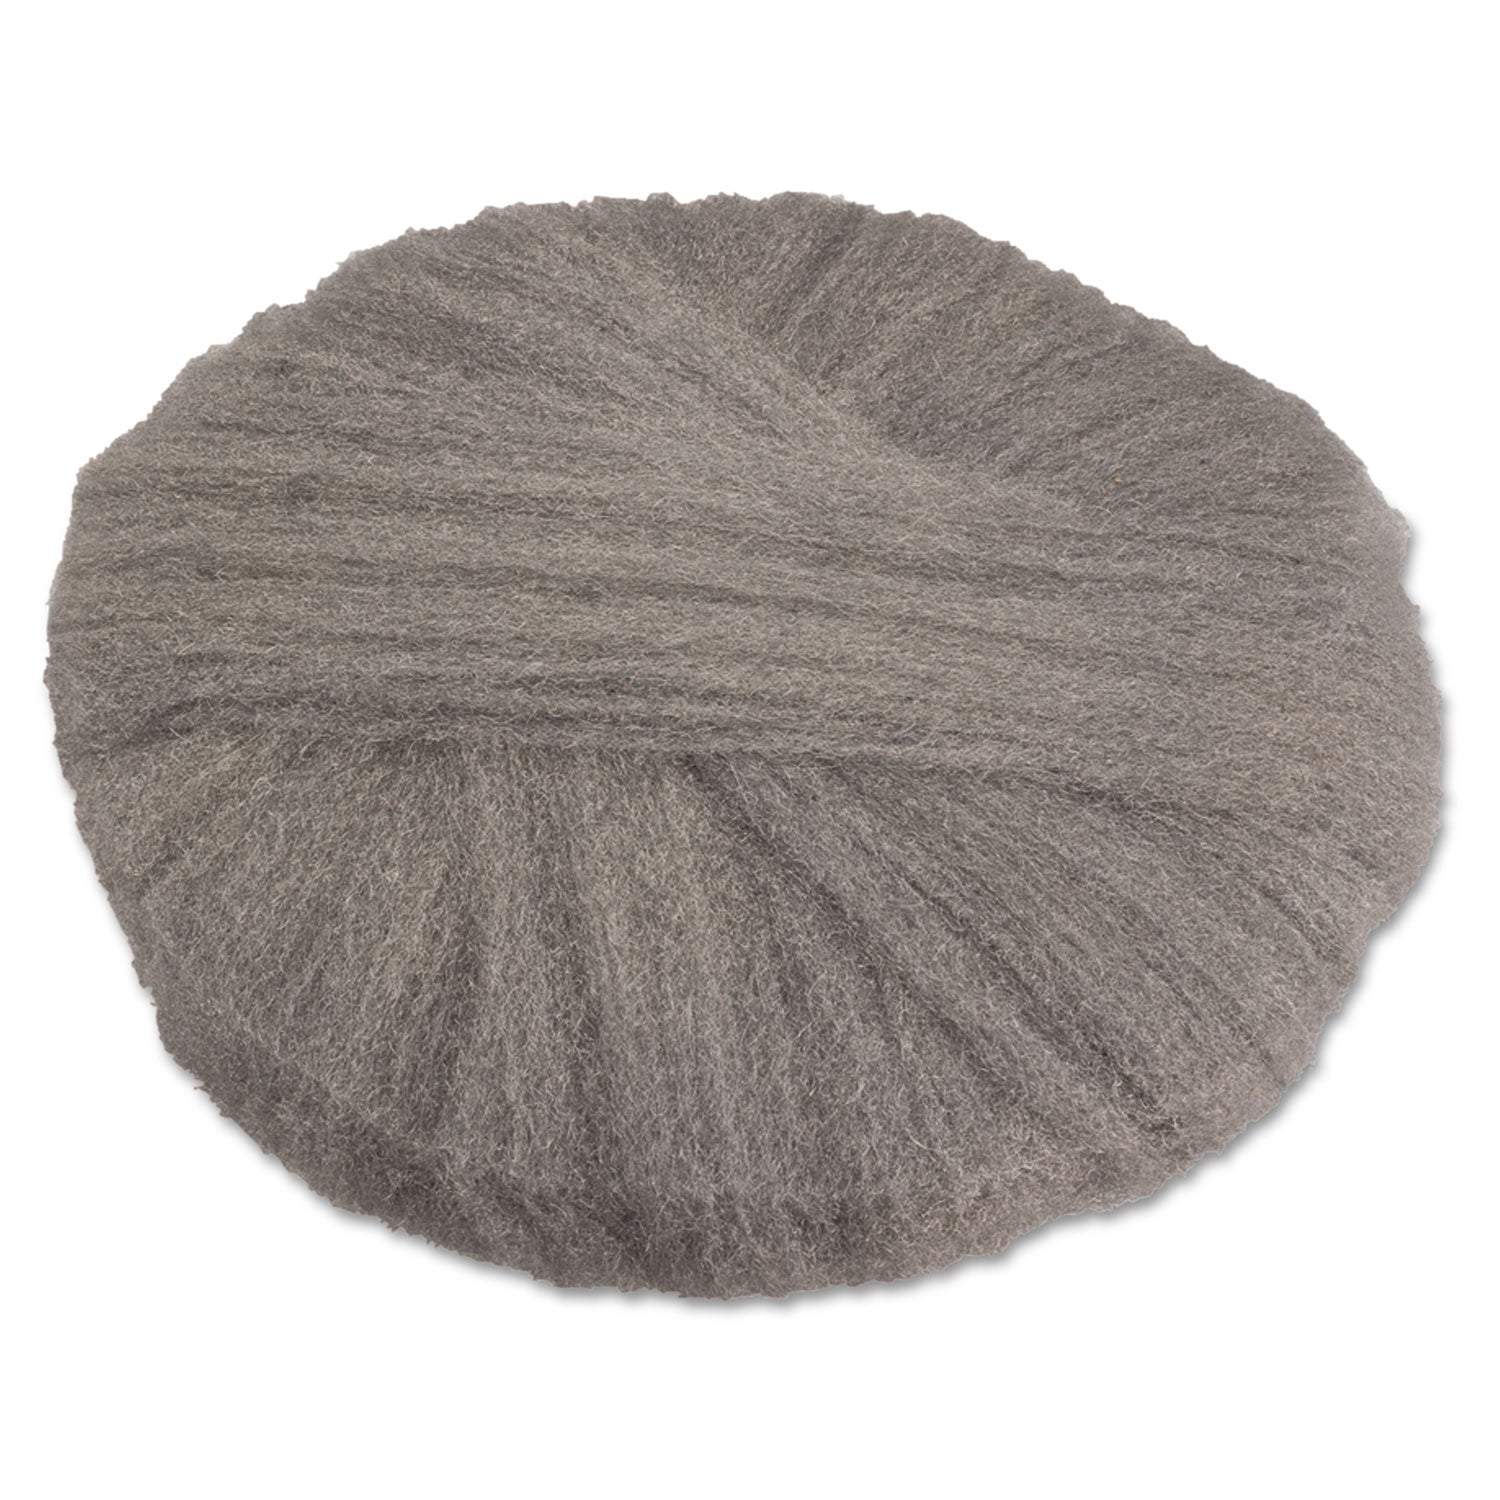 radial-steel-wool-pads-grade-0-fine-cleaning-and-polishing-17-diameter-gray-12-carton_gma120170 - 1